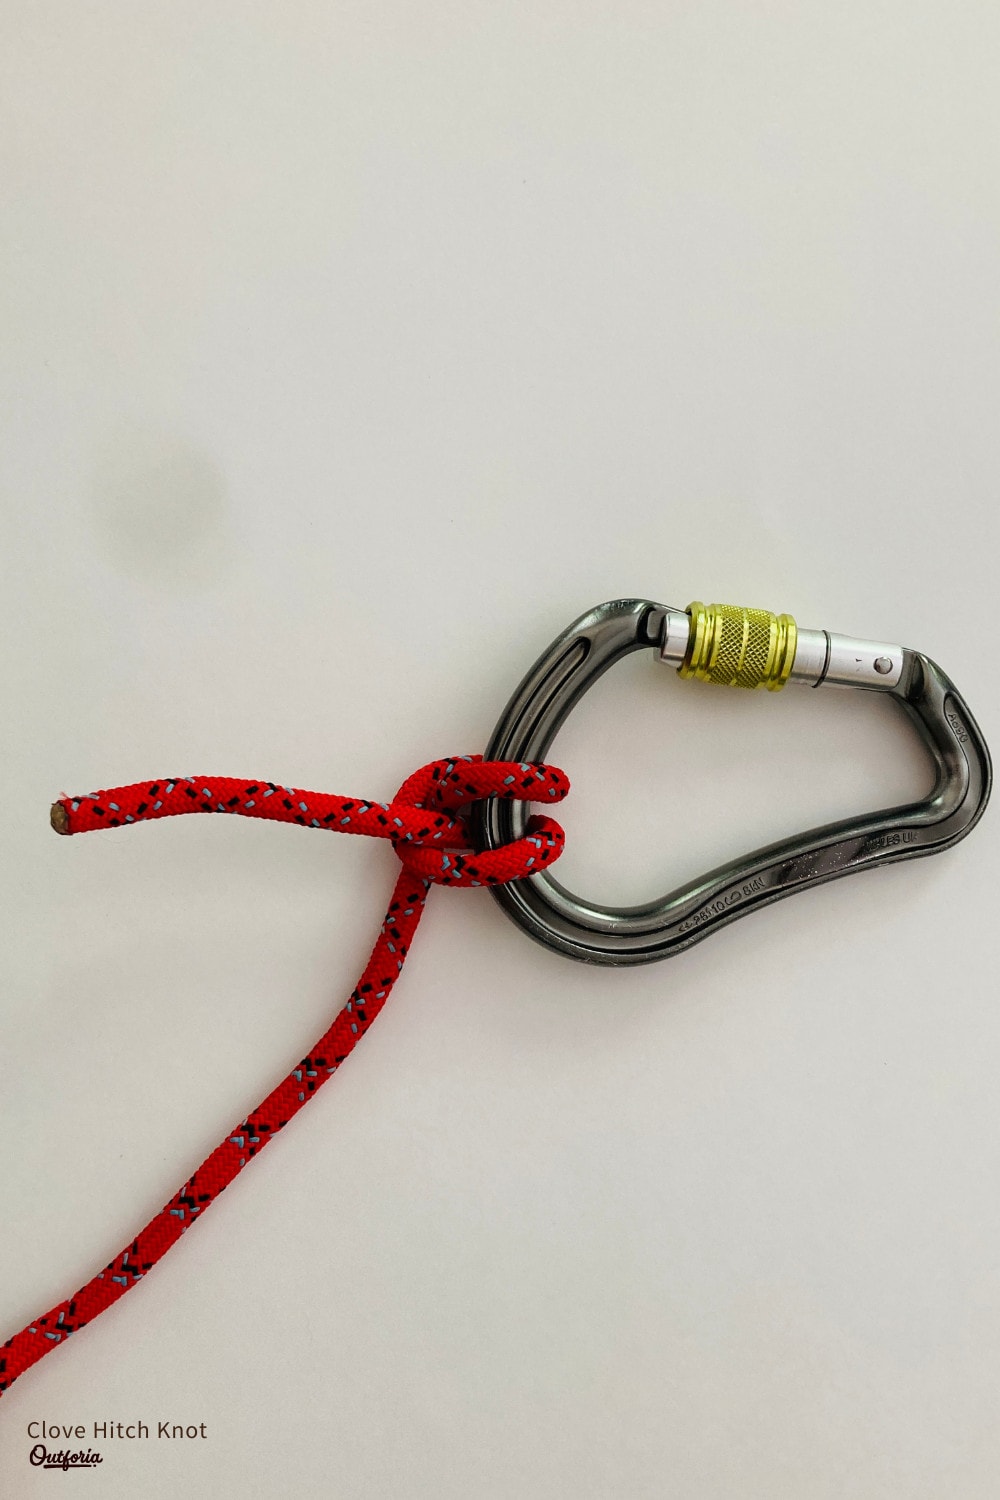 Clove Hitch knot image